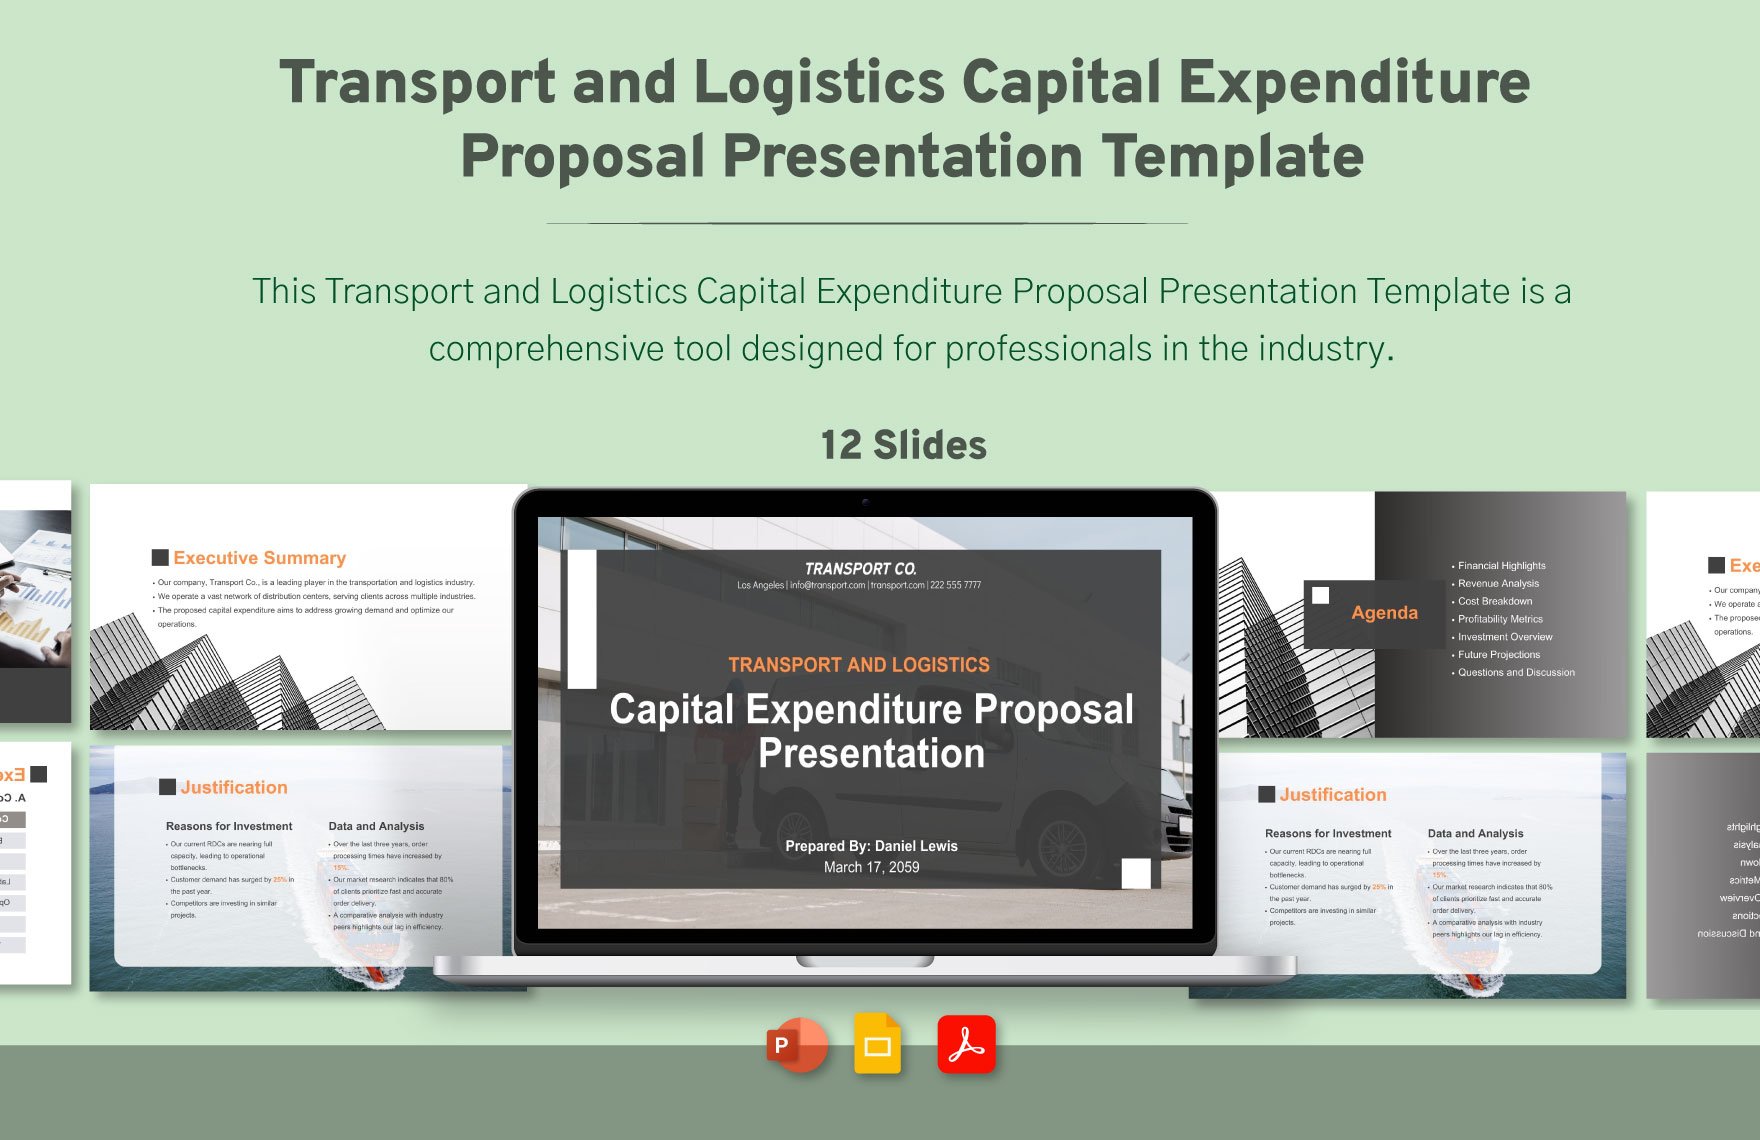 Transport and Logistics Capital Expenditure Proposal Presentation Template